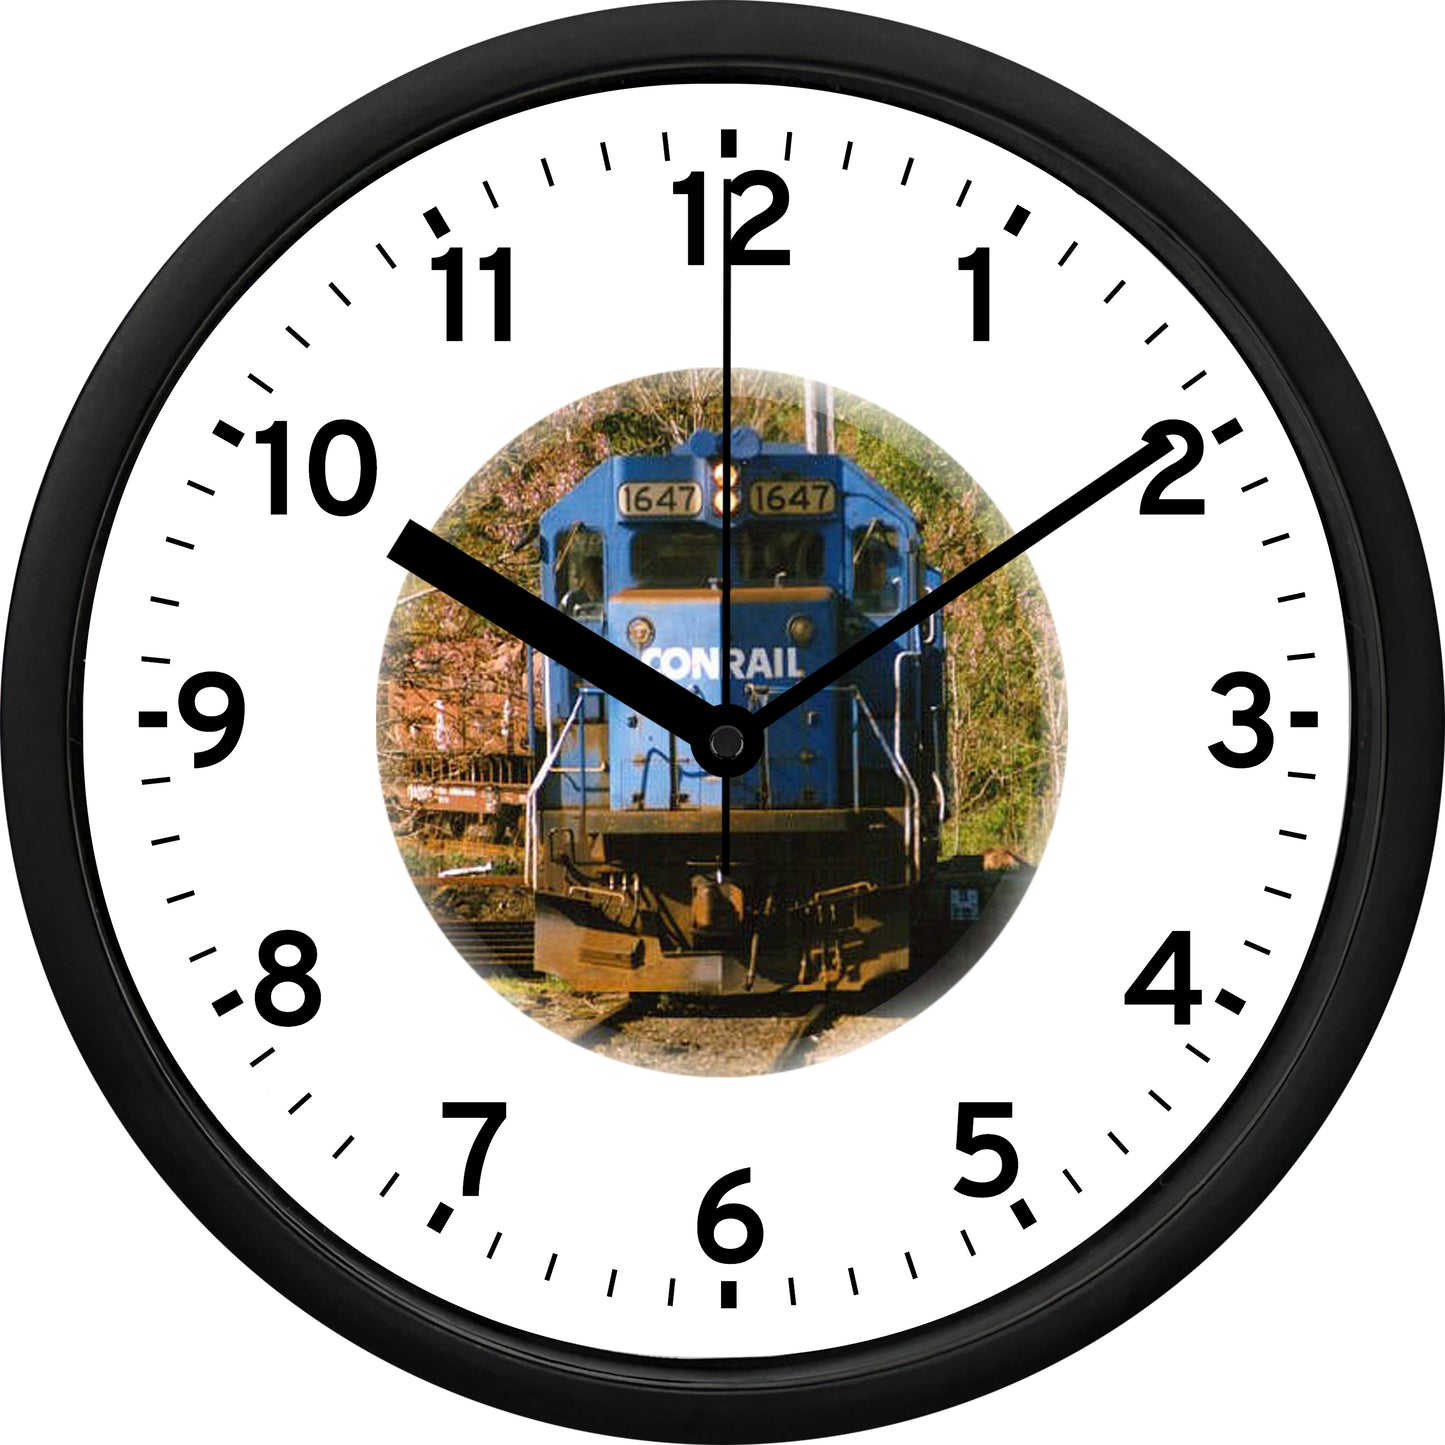 Consolidated Rail Corporation "Conrail" Wall Clock